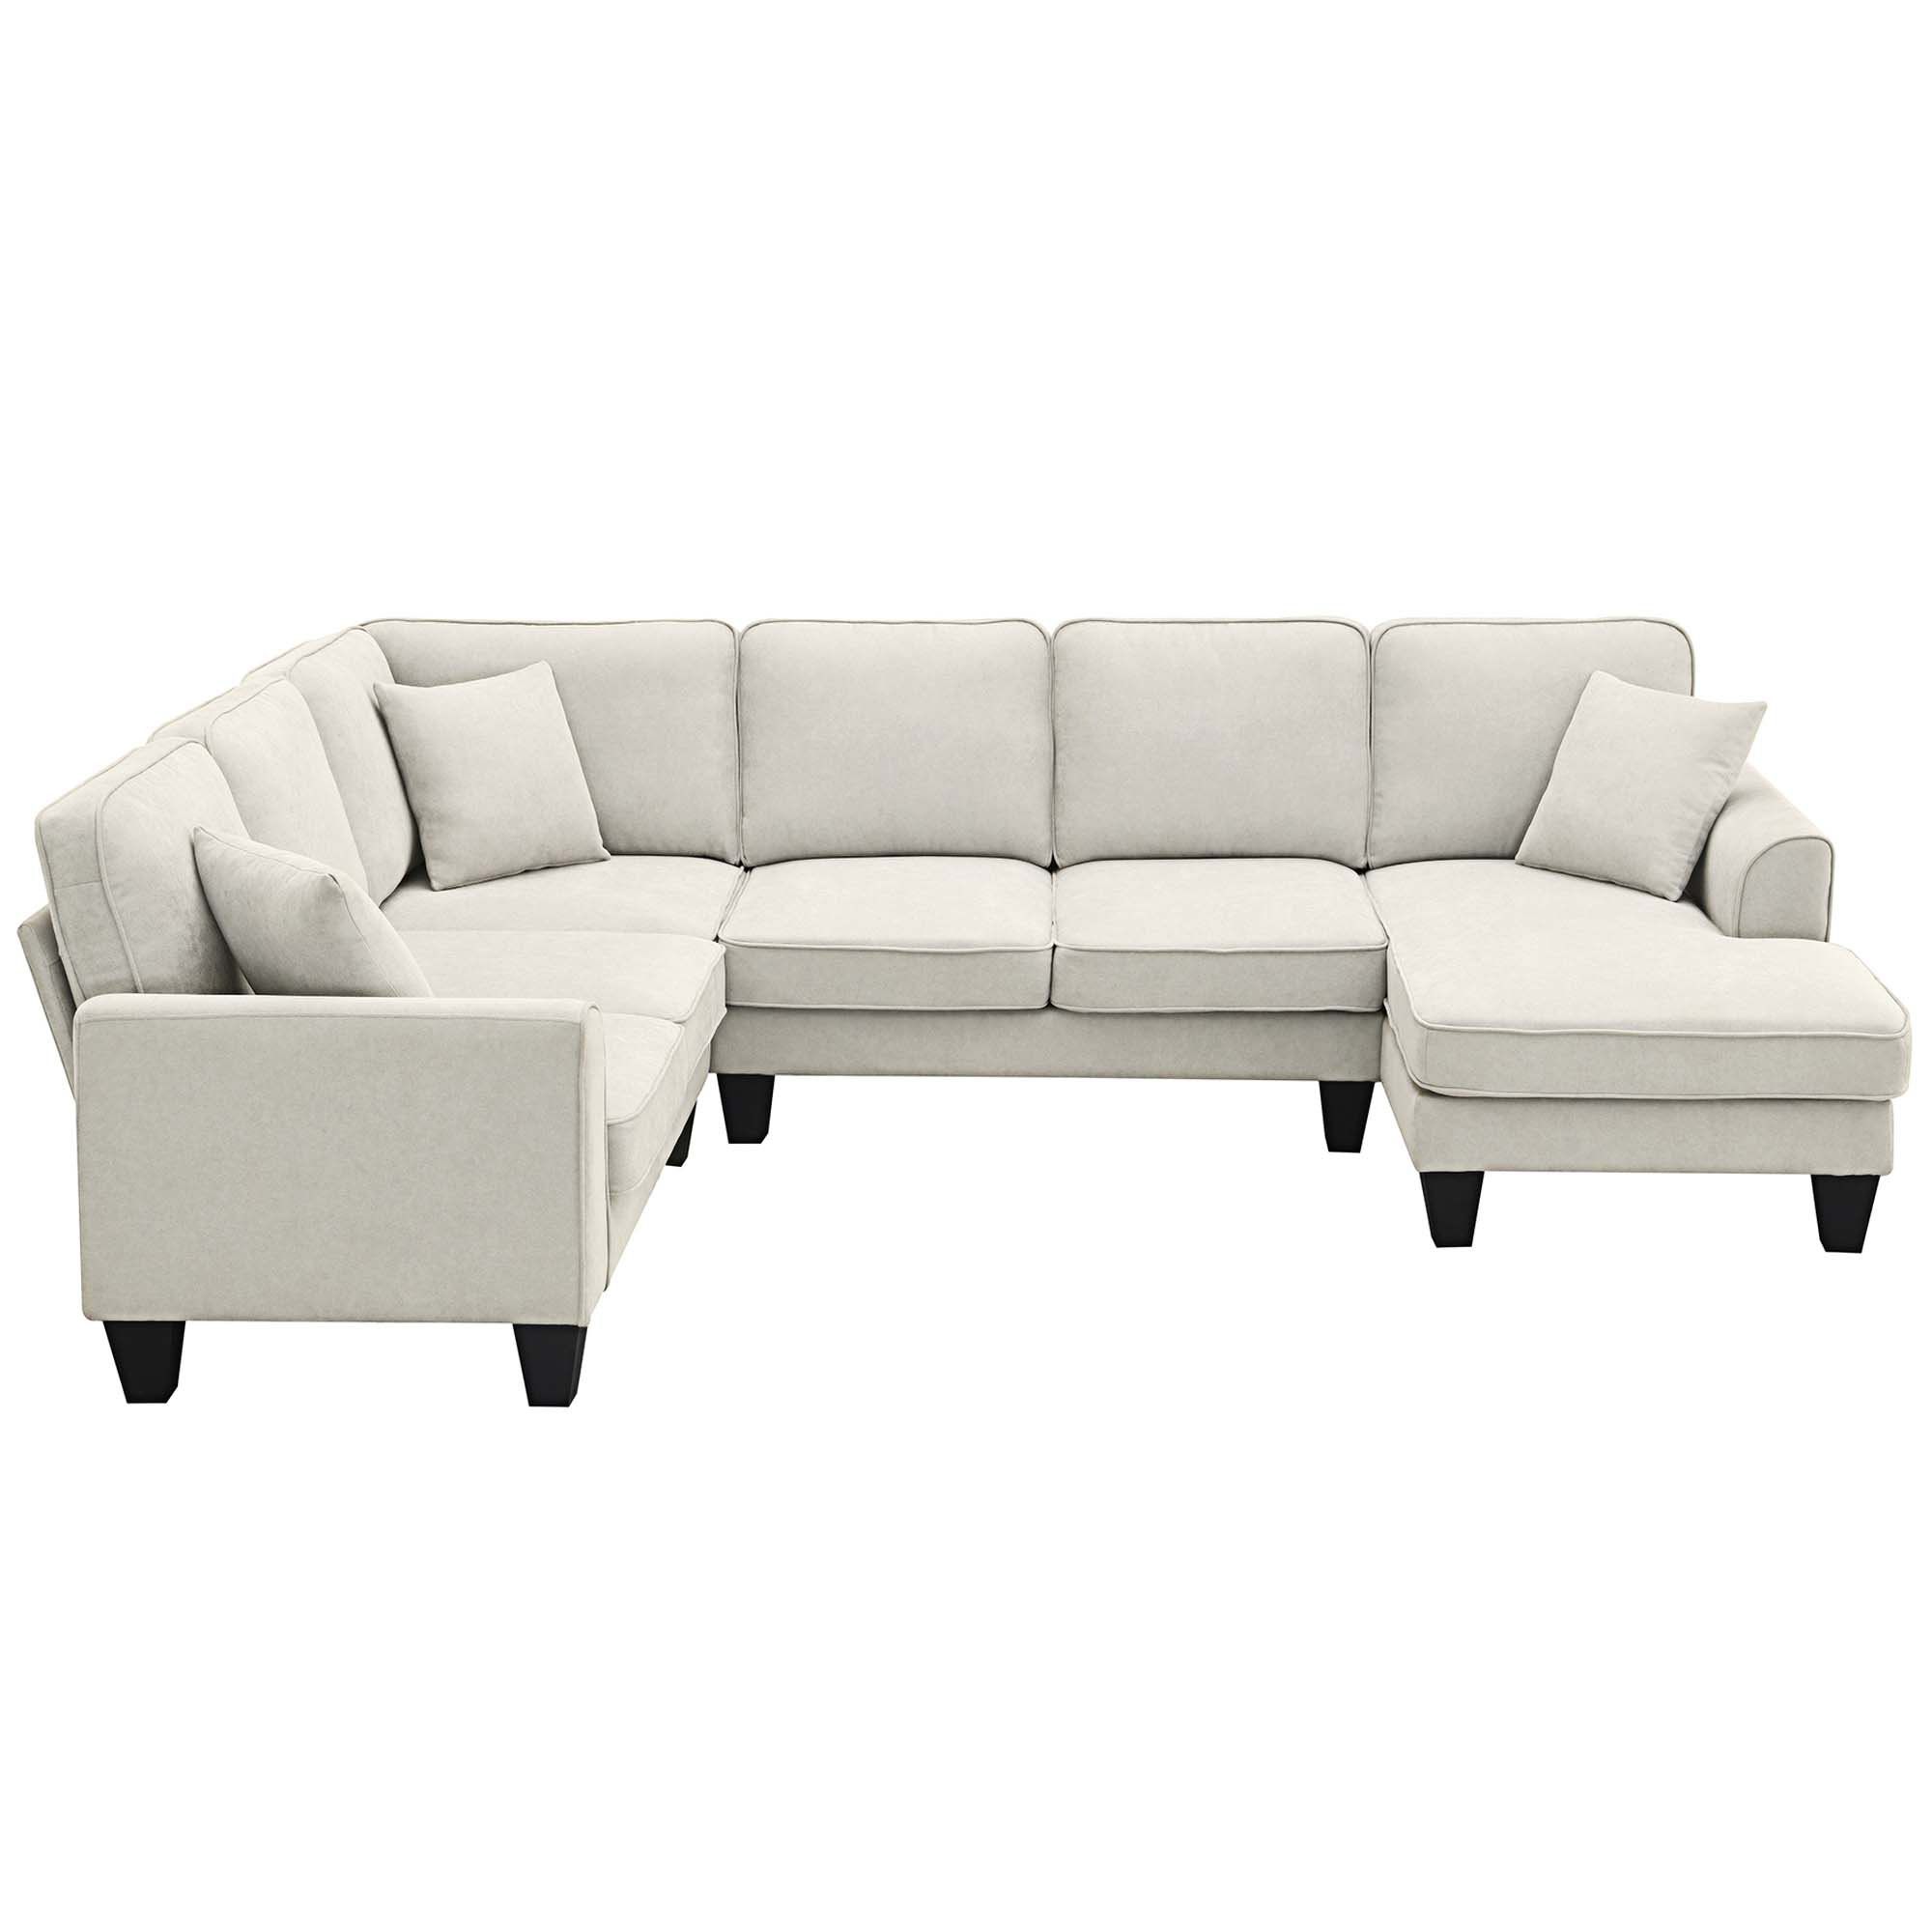 Hokku Designs Jerane Modern U Shape 7 Seat Fabric Sectional Sofa Set With 3  Pillows Included | Wayfair With Regard To Modern U Shaped Sectional Couch Sets (View 13 of 15)